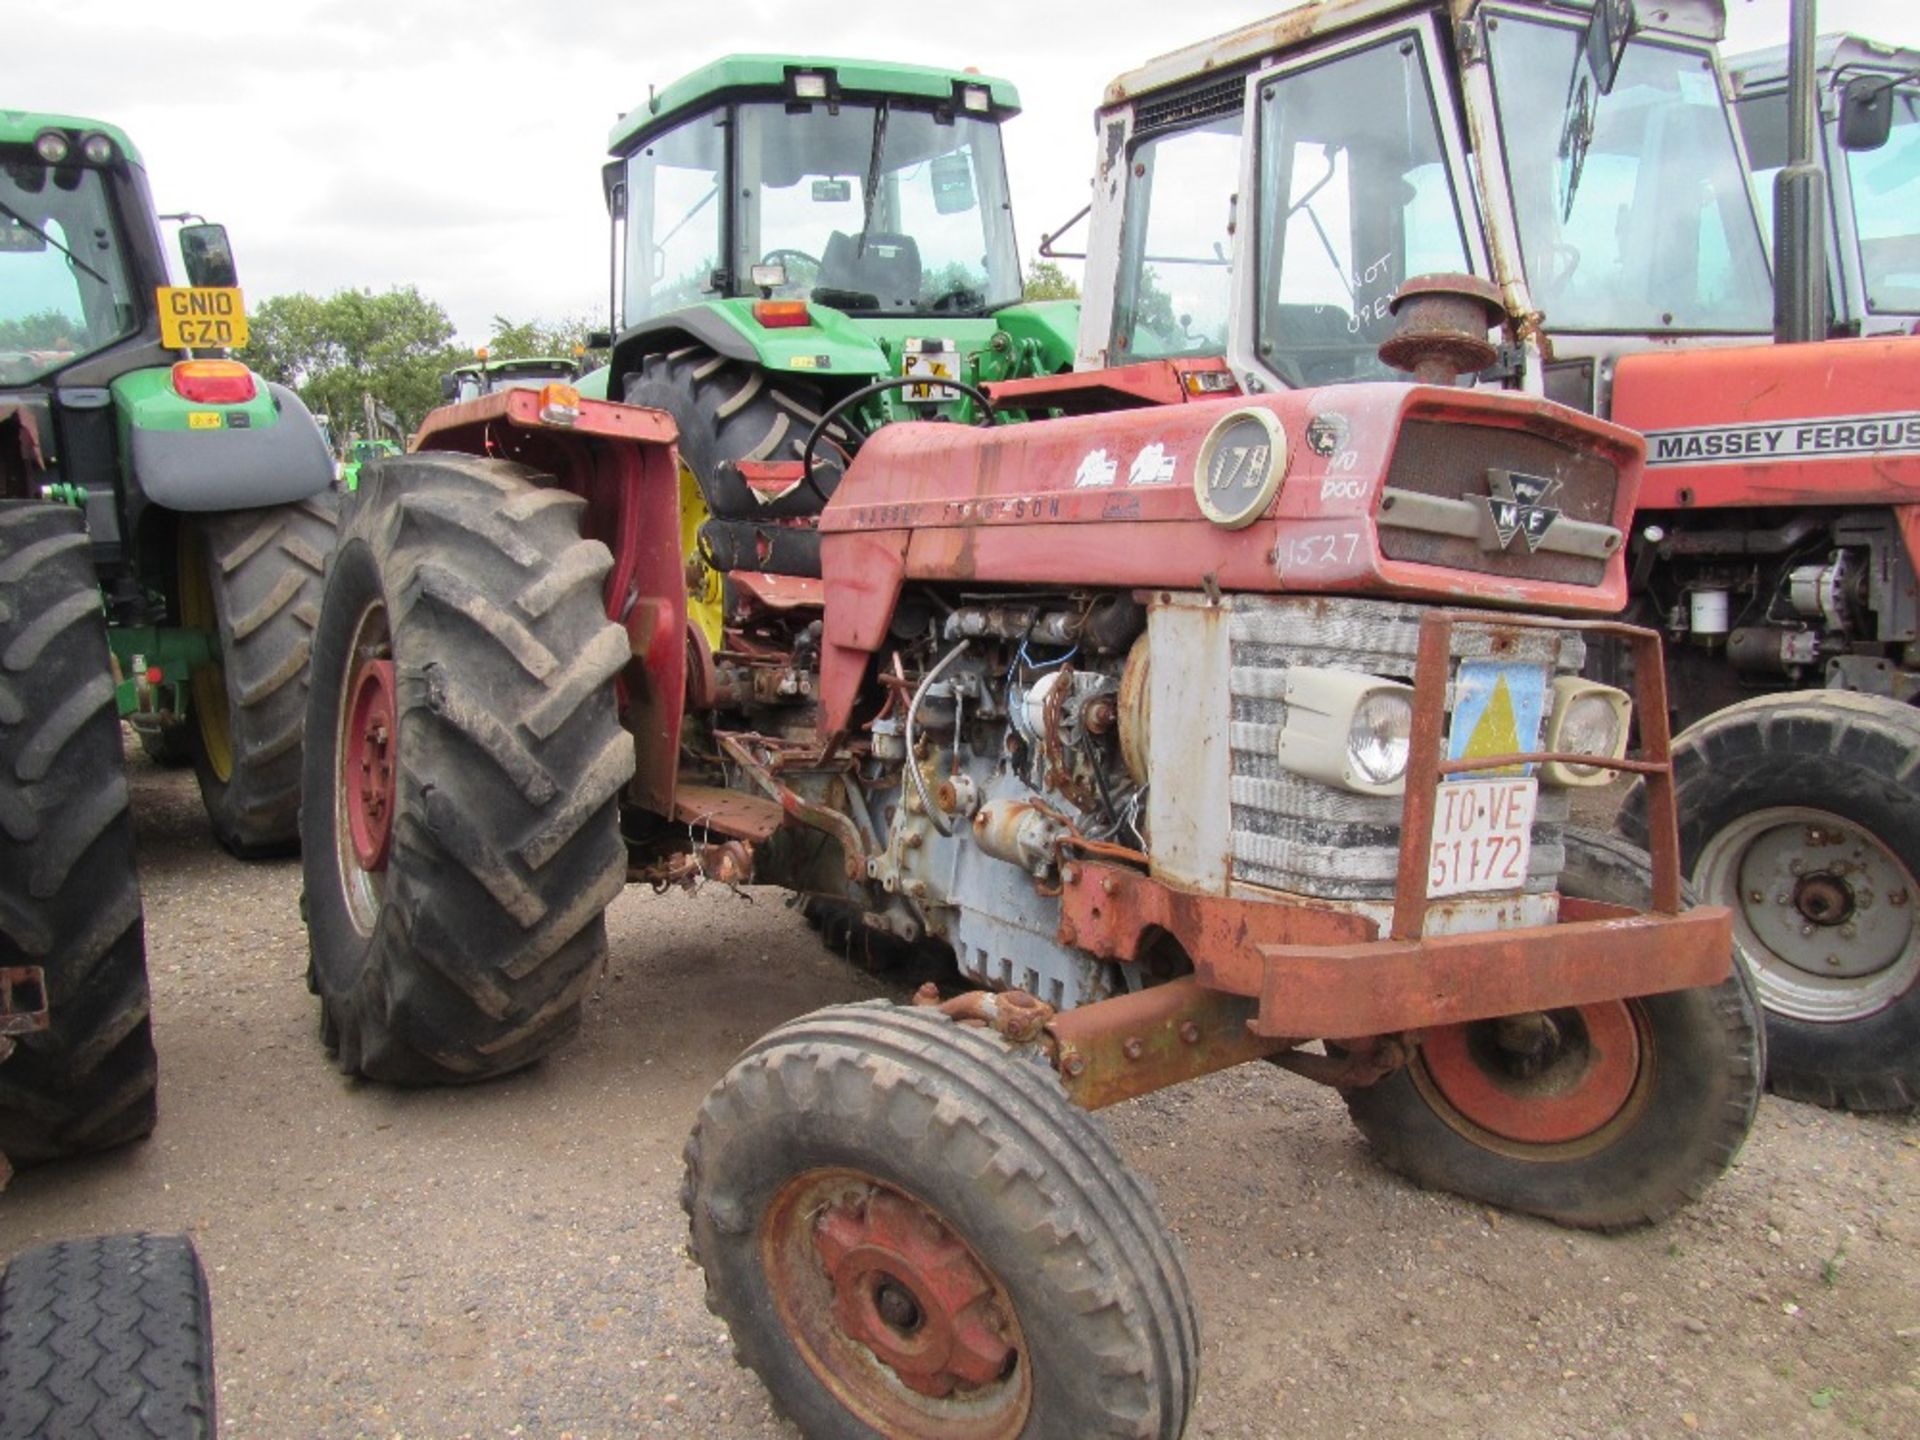 Massey Ferguson 178 Tractor. Ser. No. 43962 - Image 2 of 4